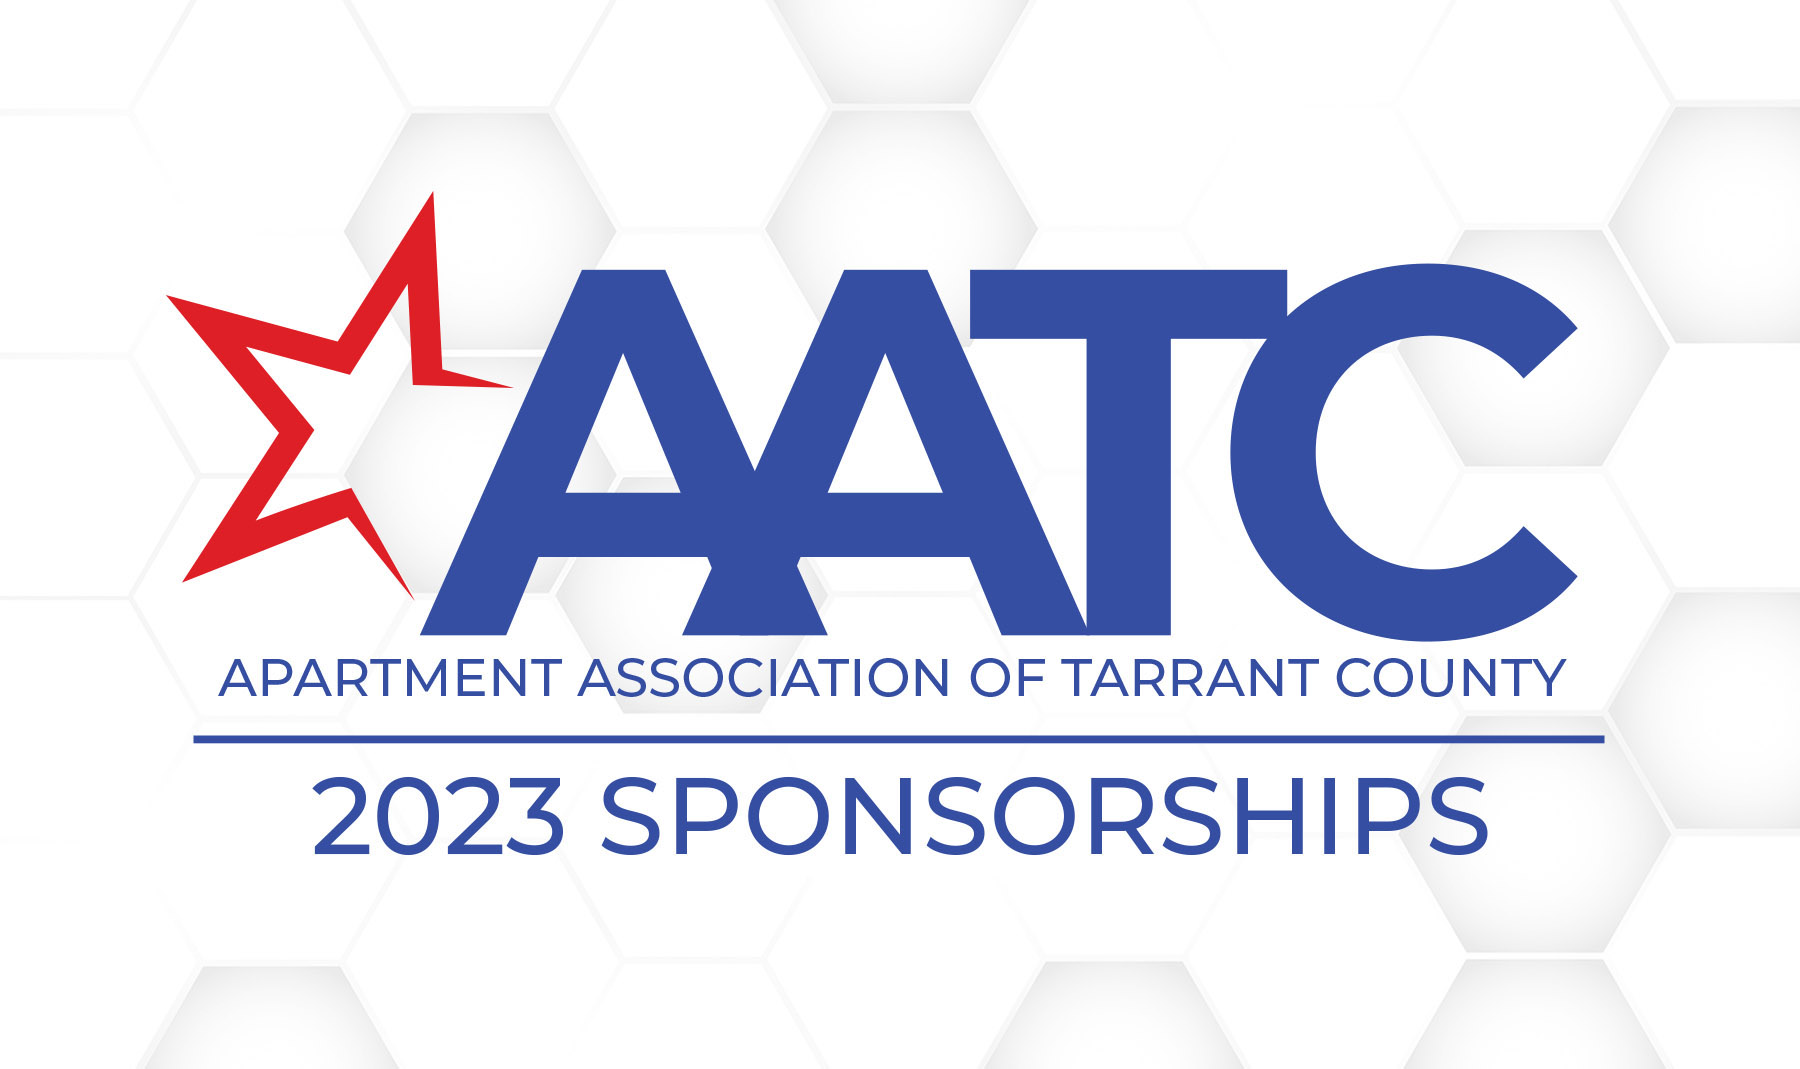 AATC 2023 Sponsorships Available!